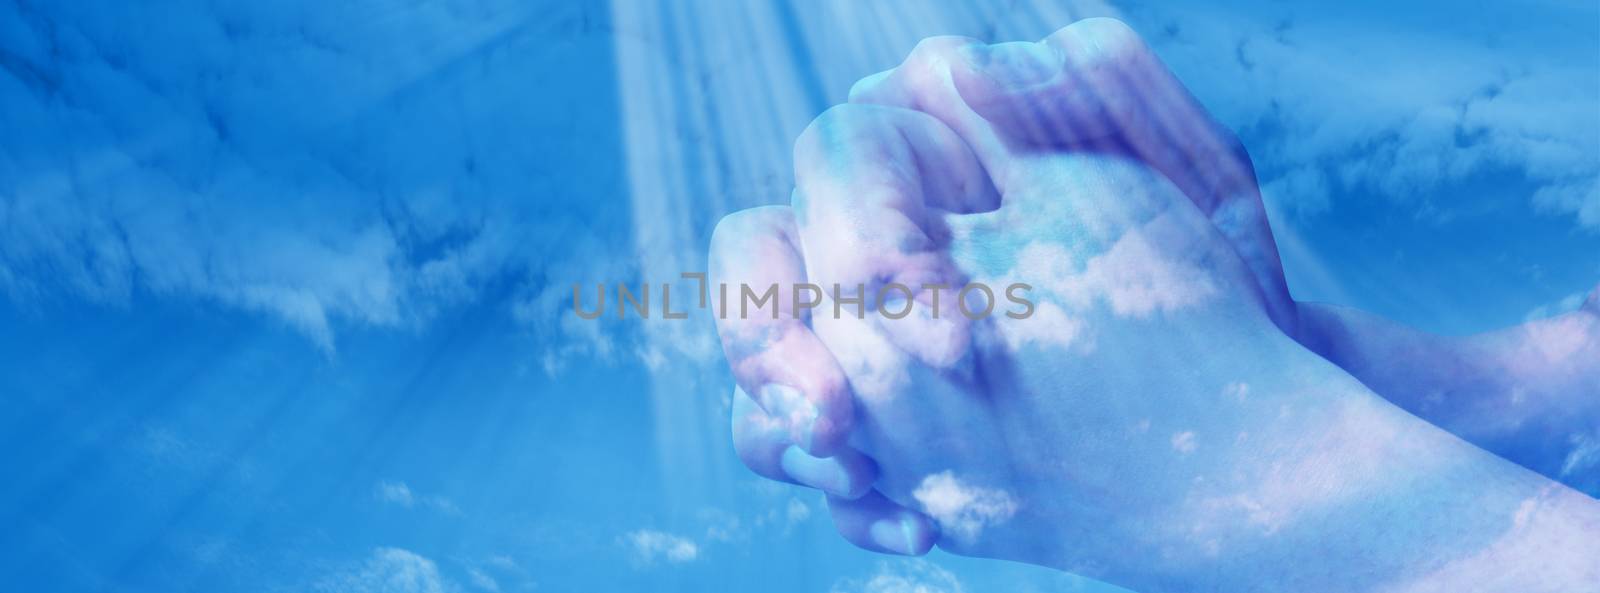 Prayers hands in the blue sky -facebook timeline